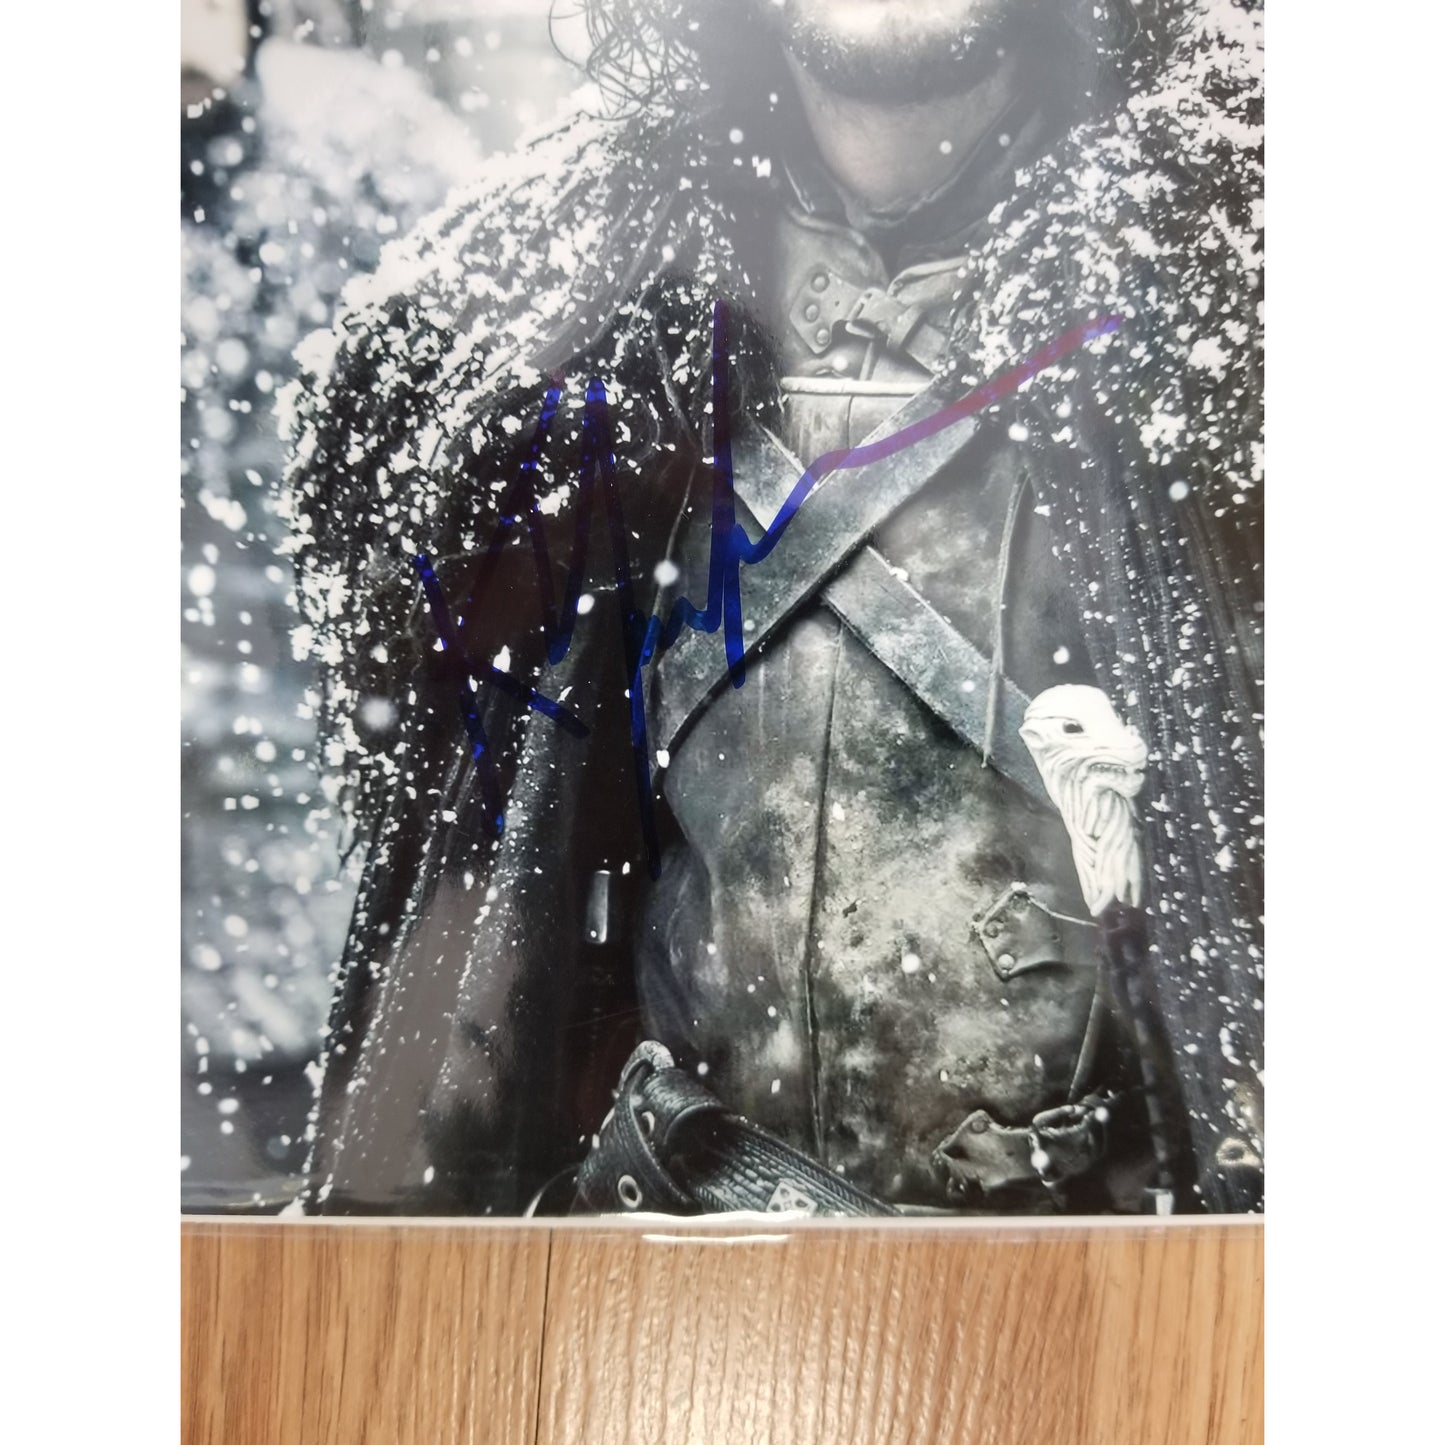 Signed: Jon Snow print